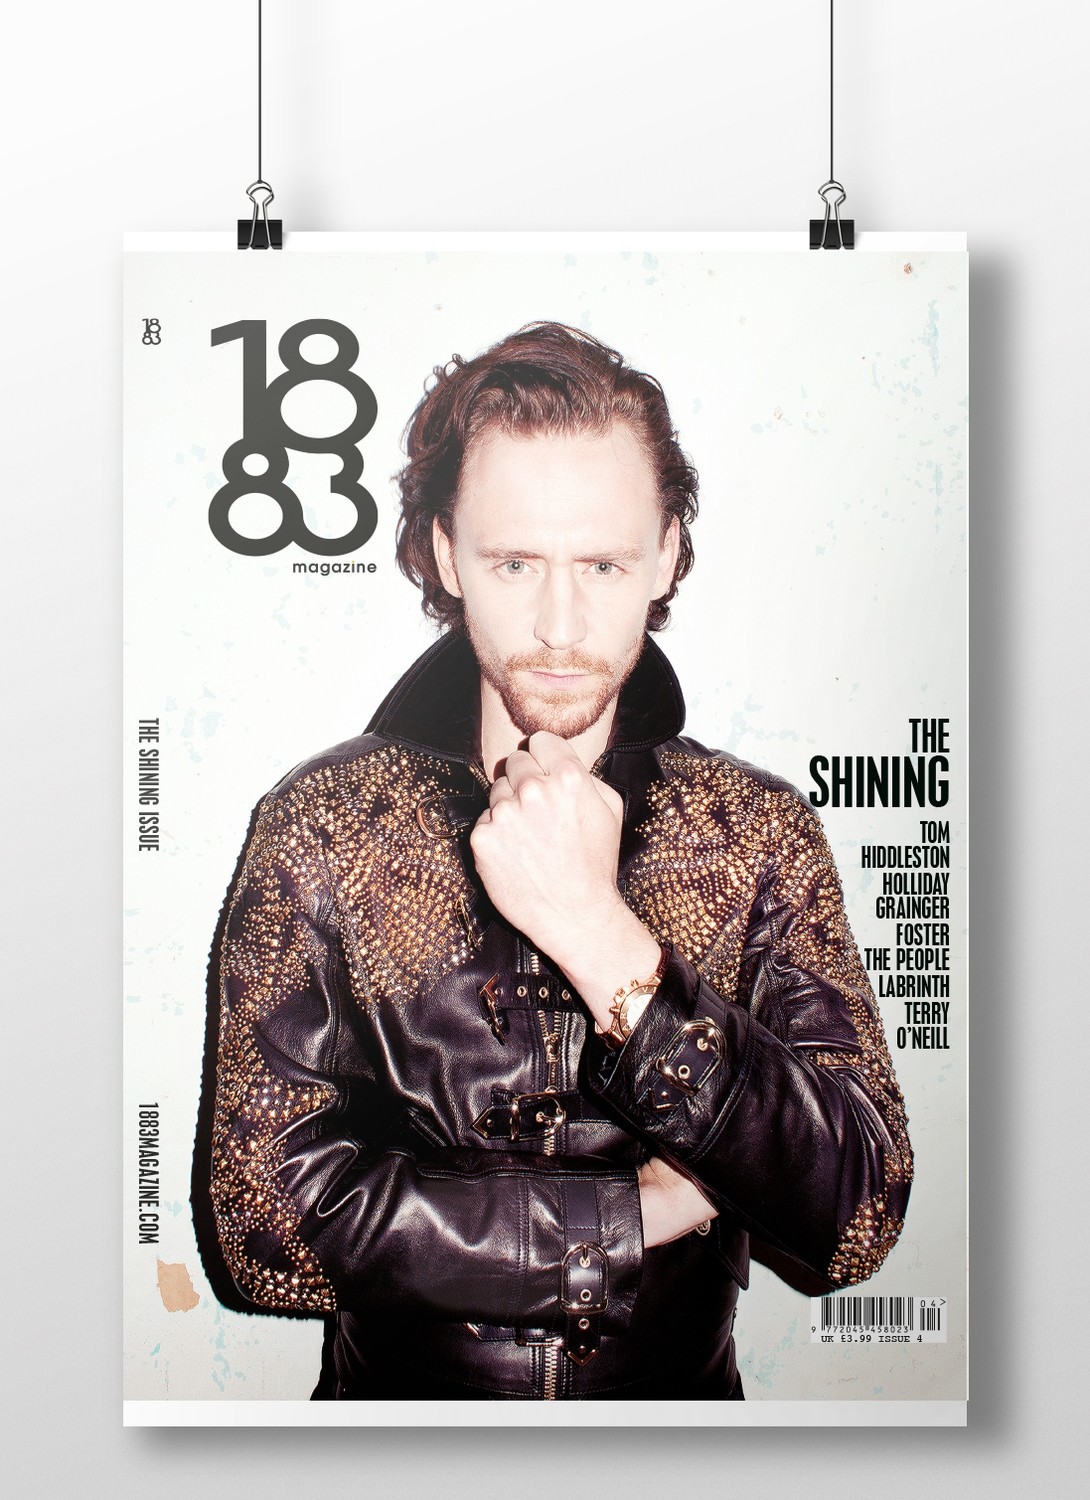 Tom Hiddleston cover poster